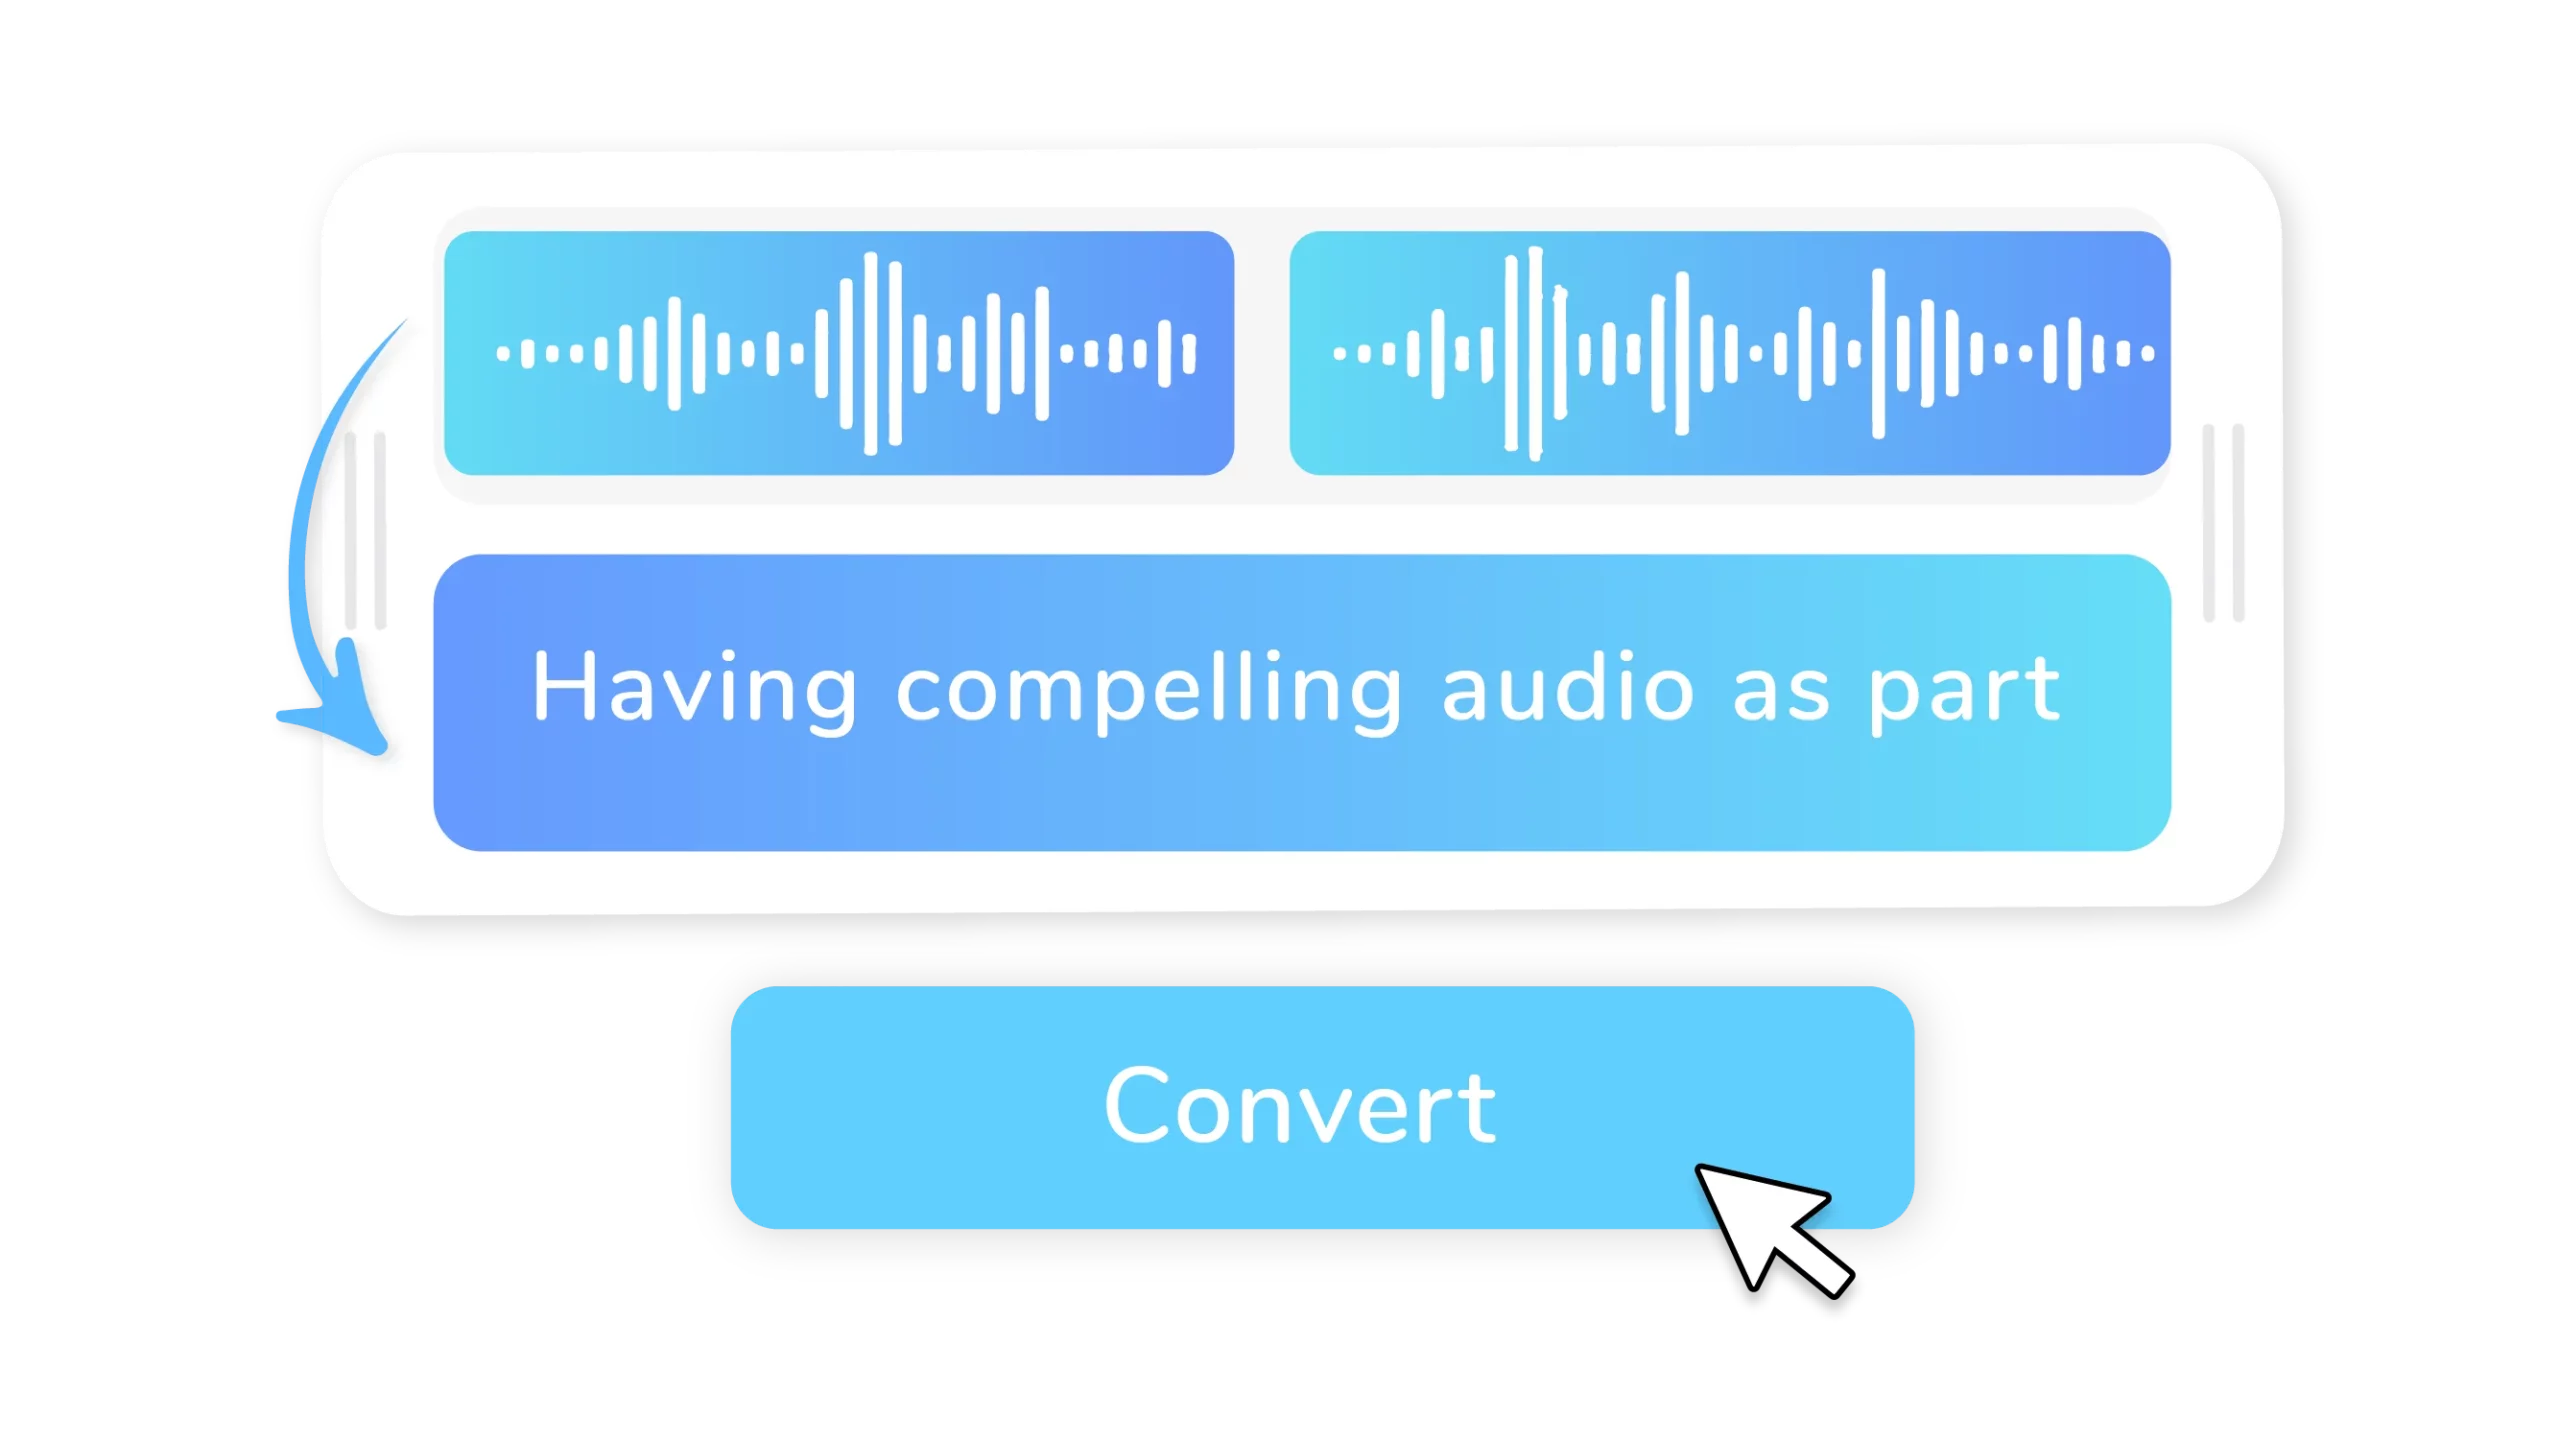 Audio konvertieren